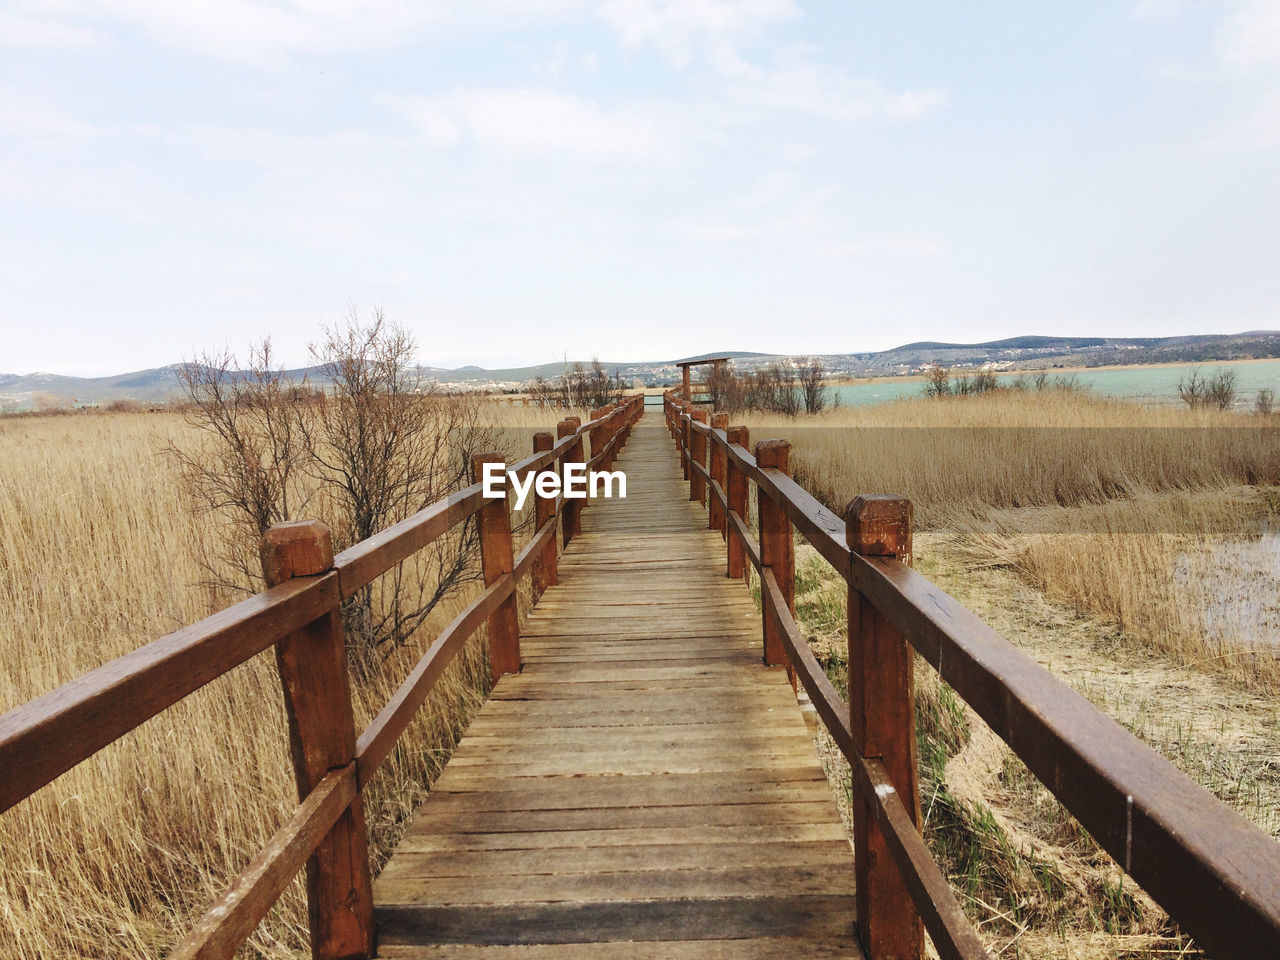 Vrana lake in croatia, natural birds reservat, a straight forward, wooden bridge under the water